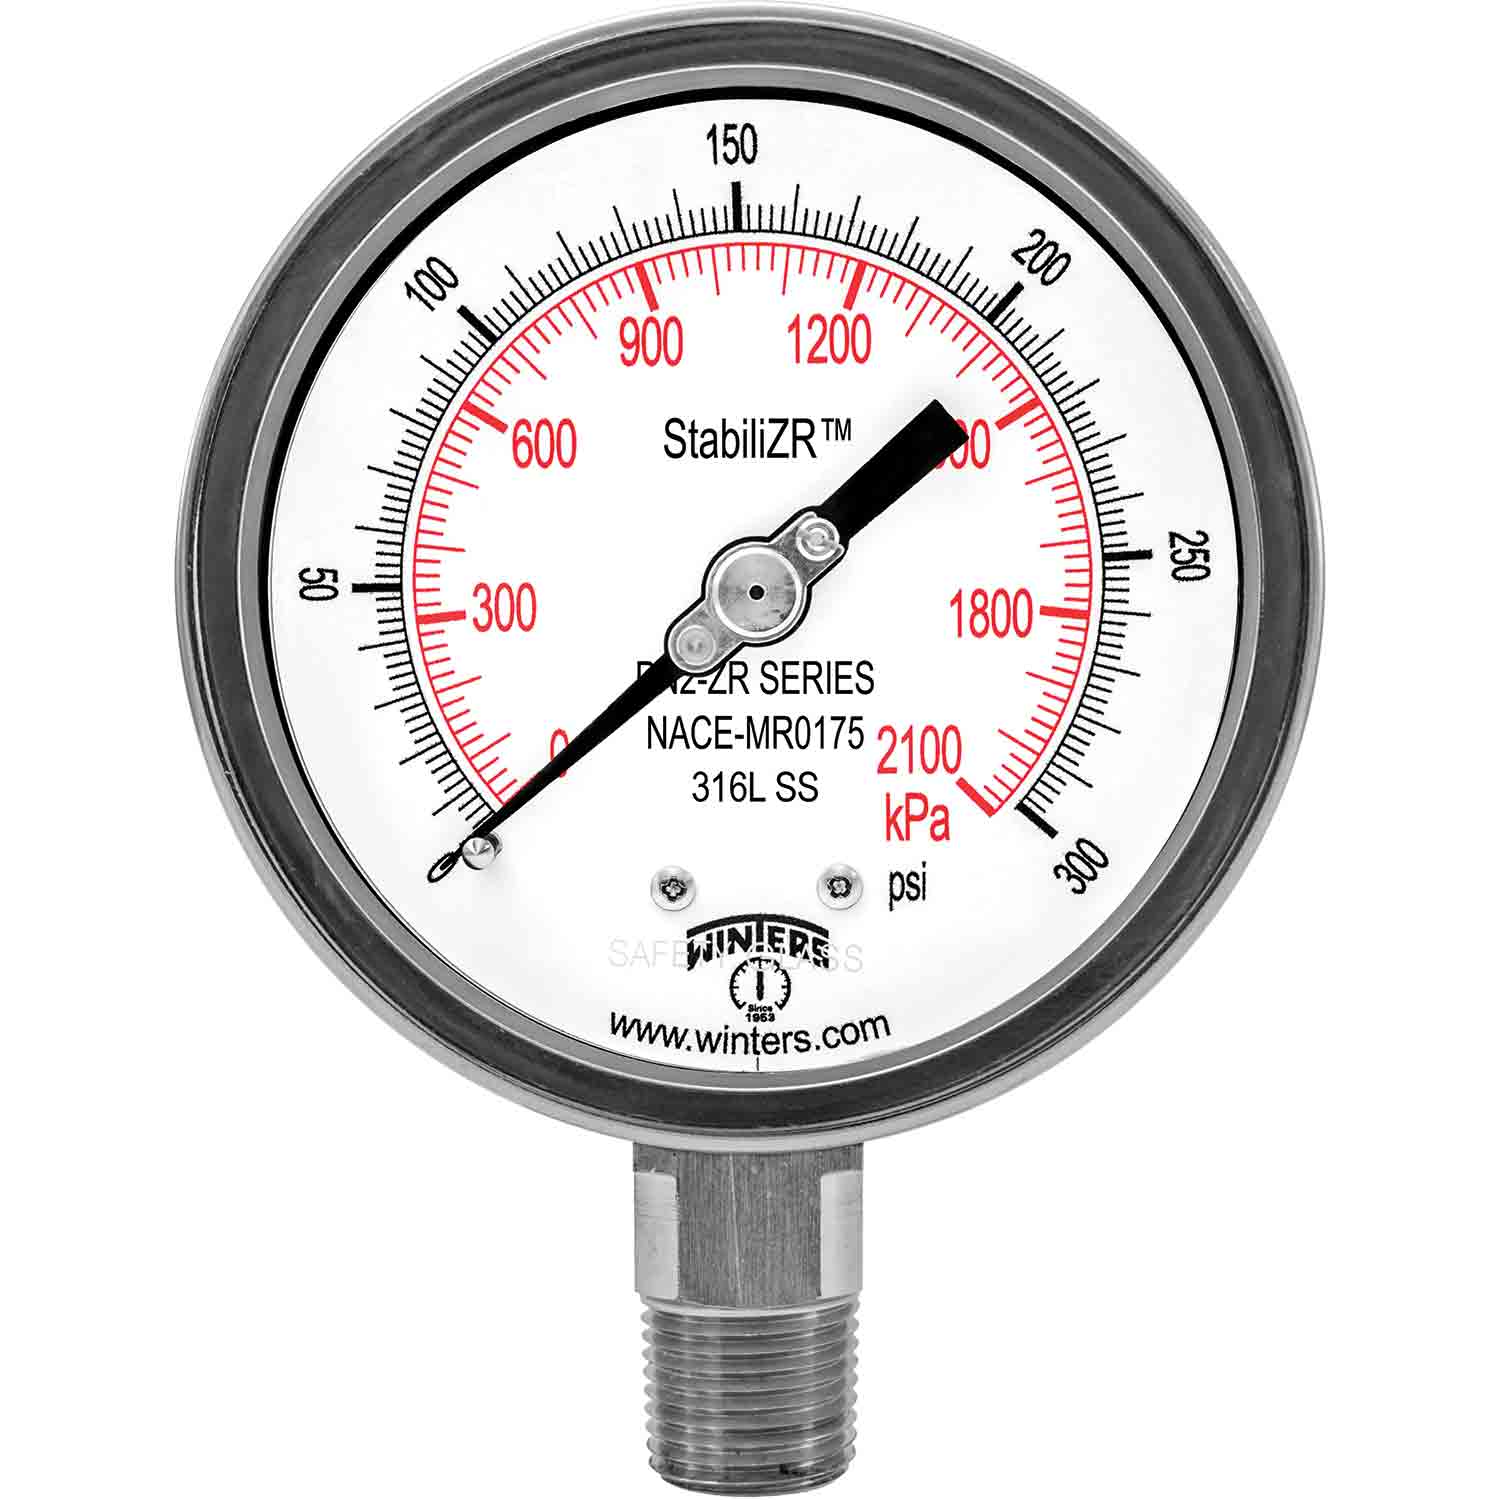 Pressure gauge photo